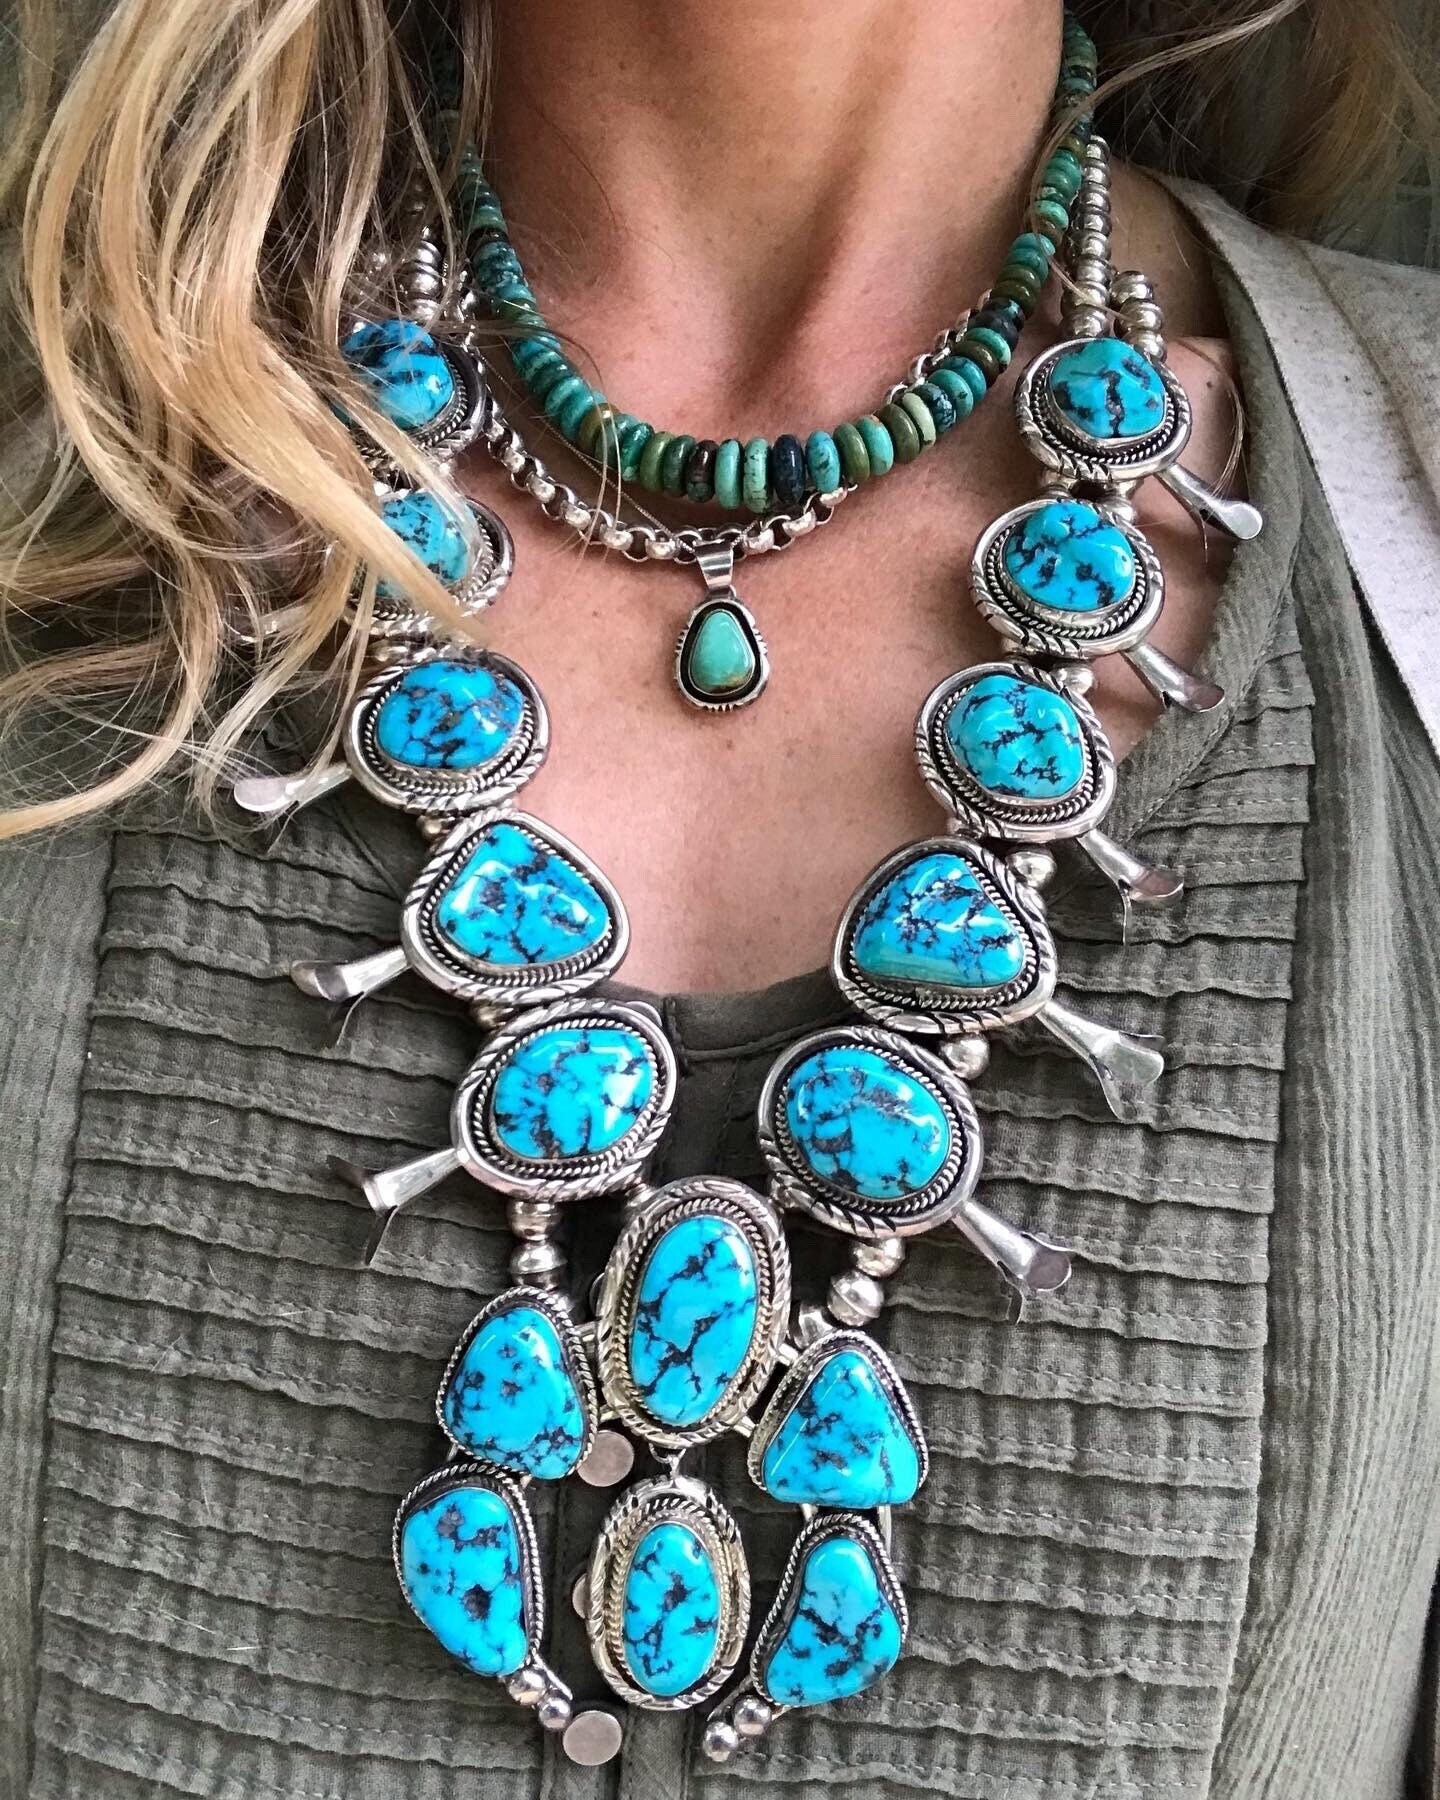 Native American (Navajo) Squash Blossom Necklace - Turquoise